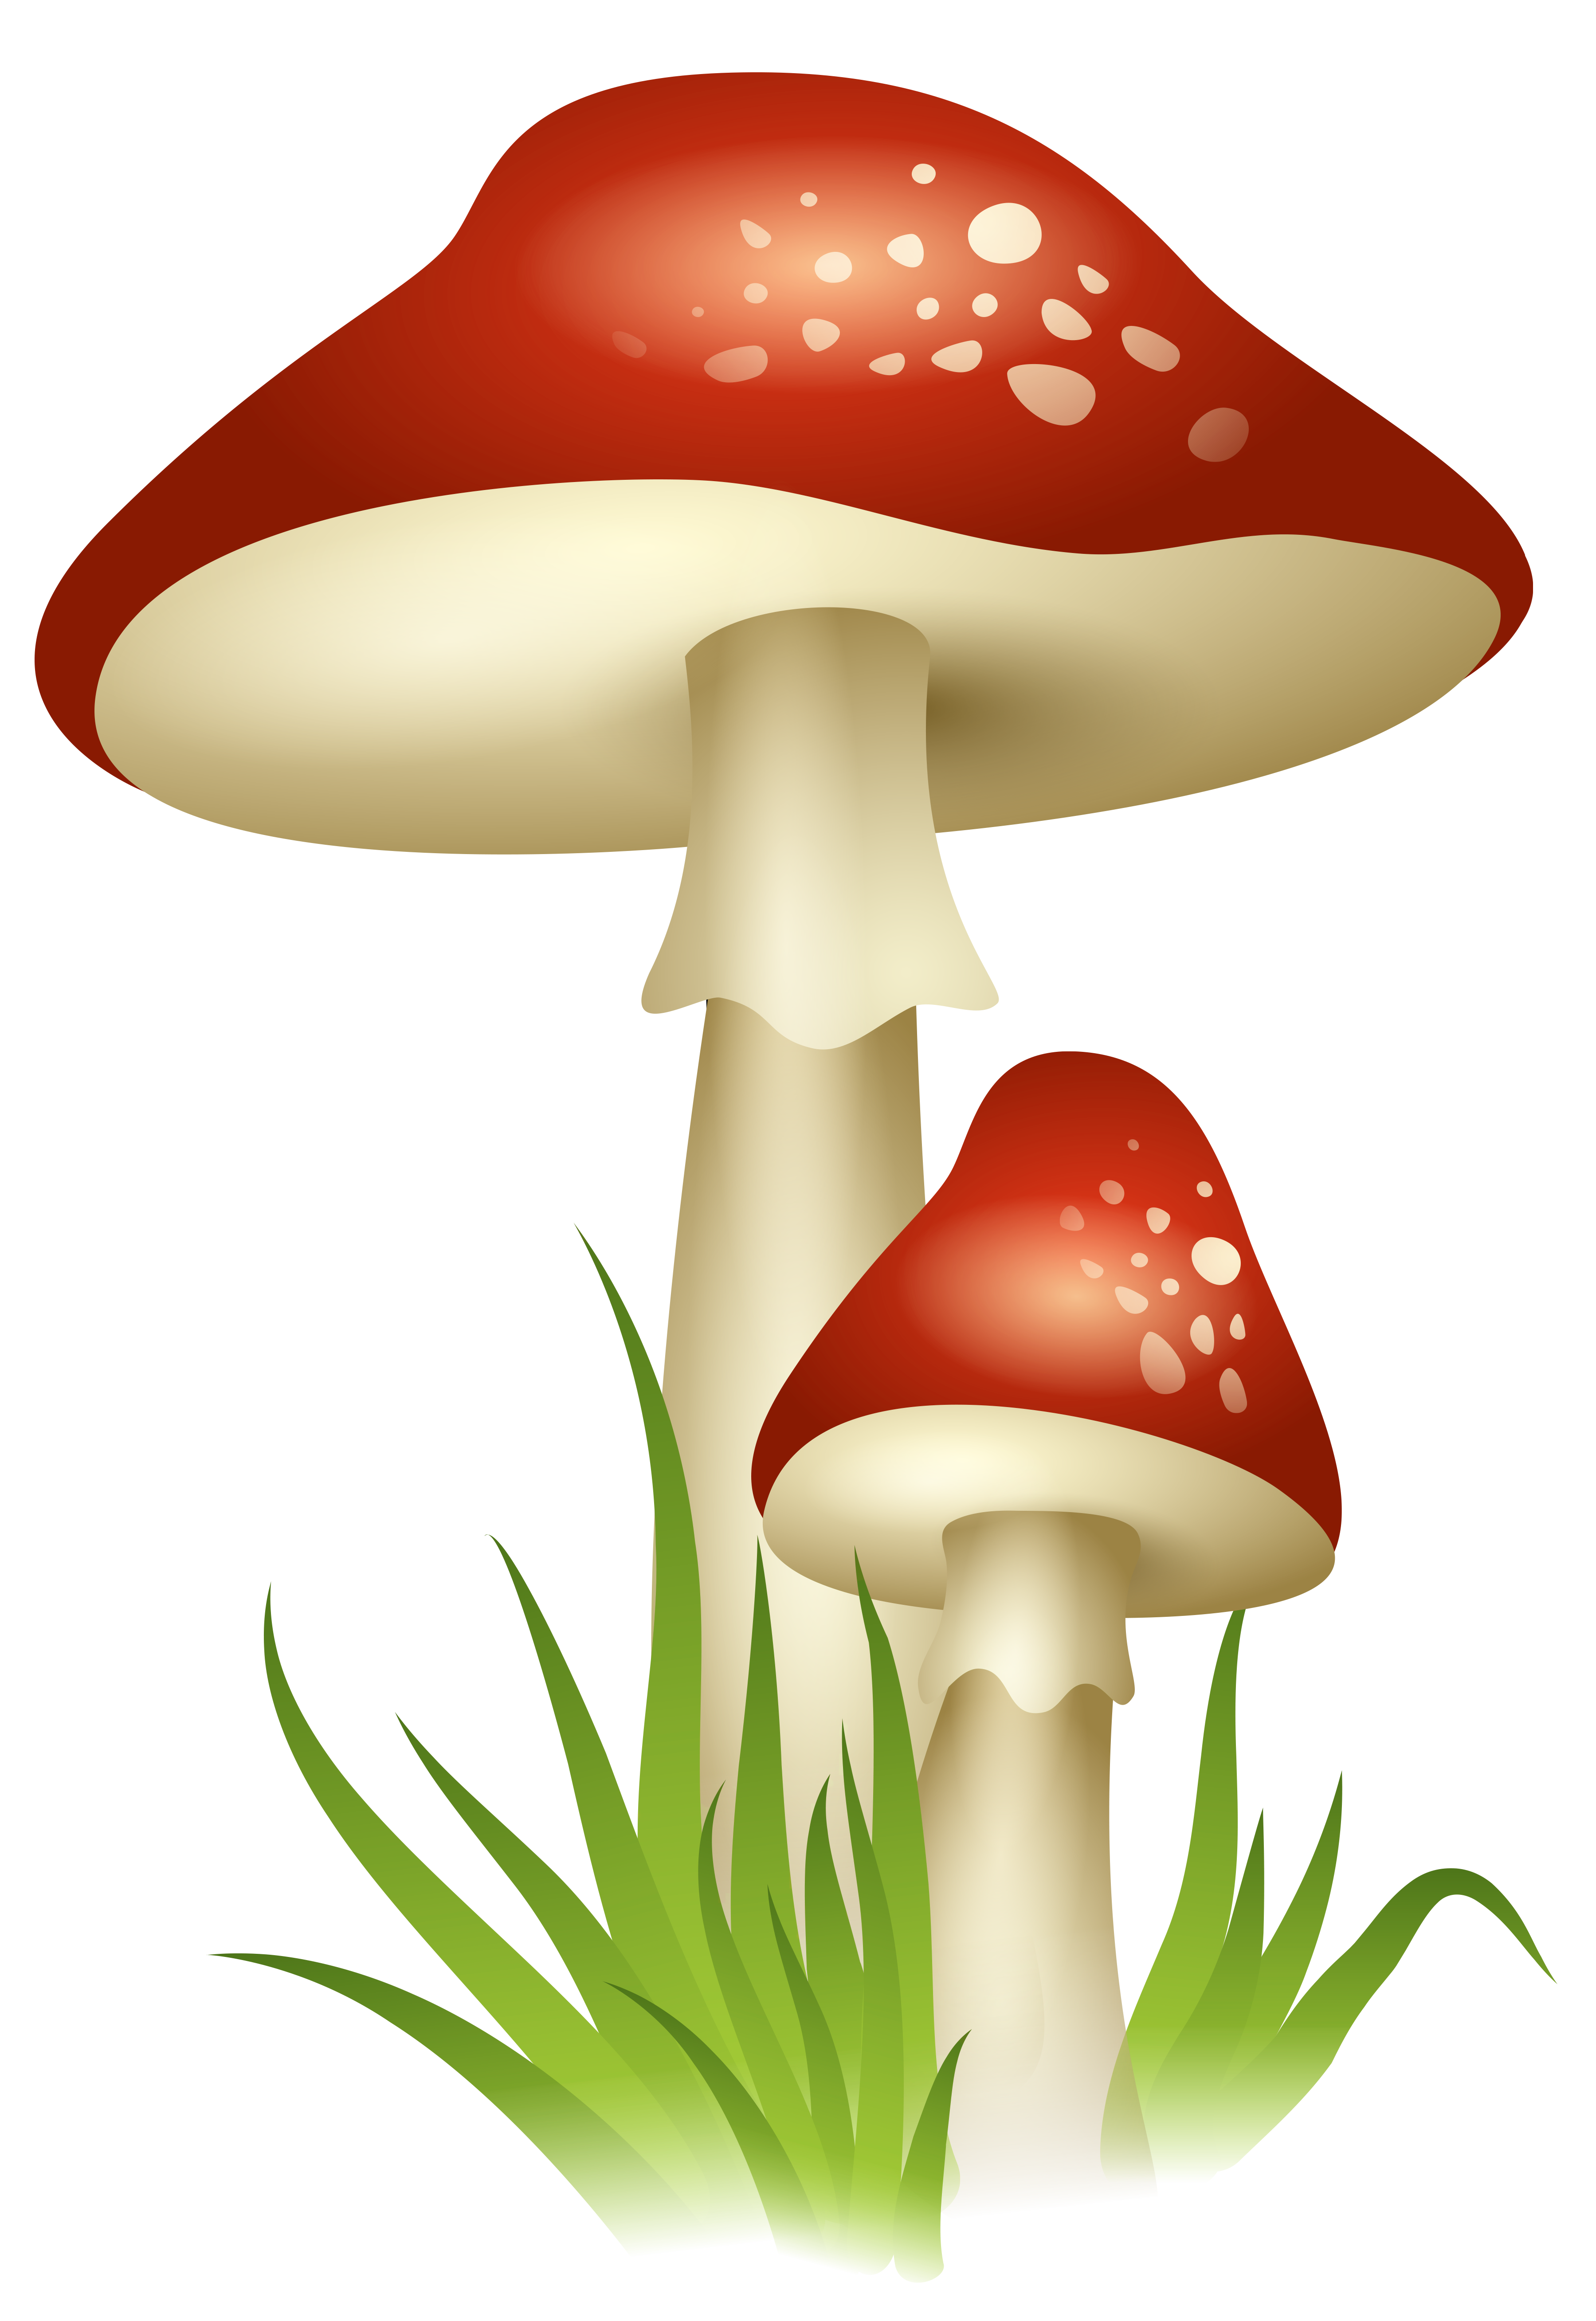 Clipart grass mushroom. Mushrooms transparent png picture